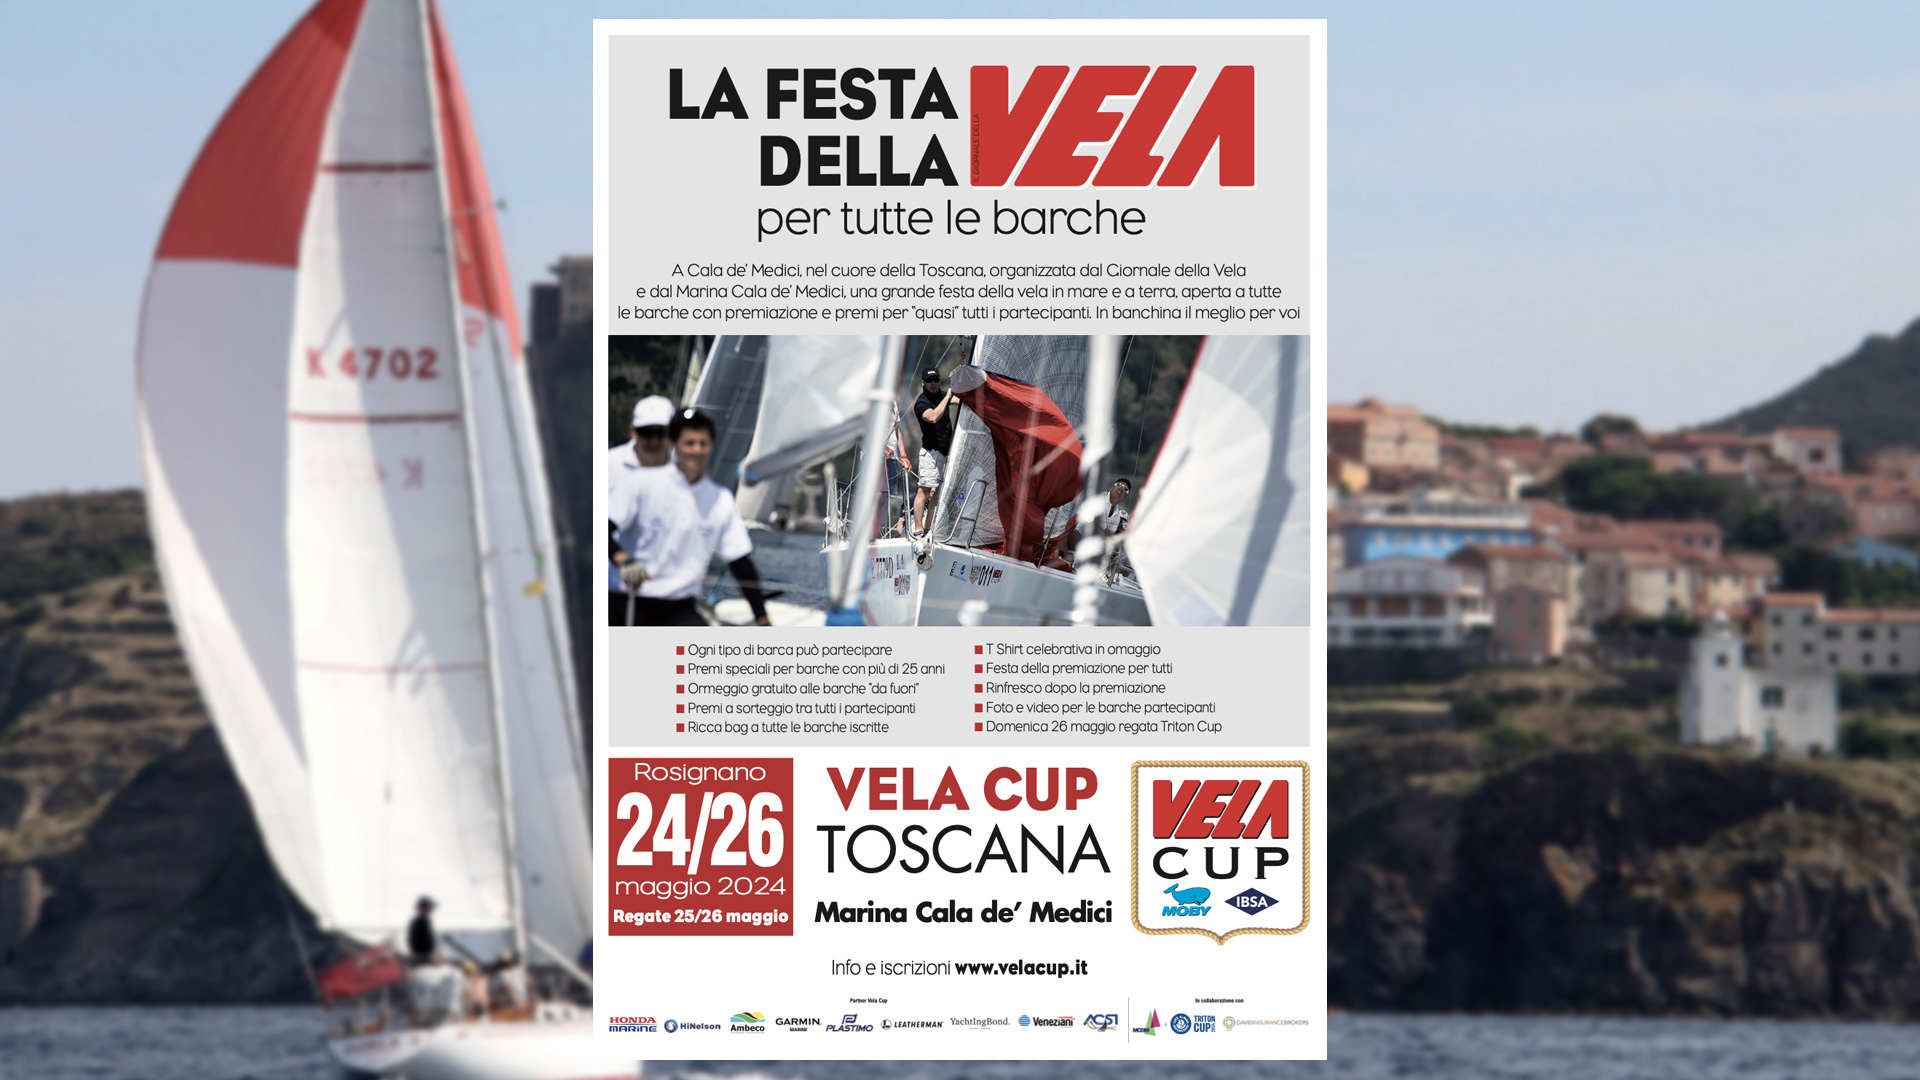 VELA Cup Toscana/Triton Cup